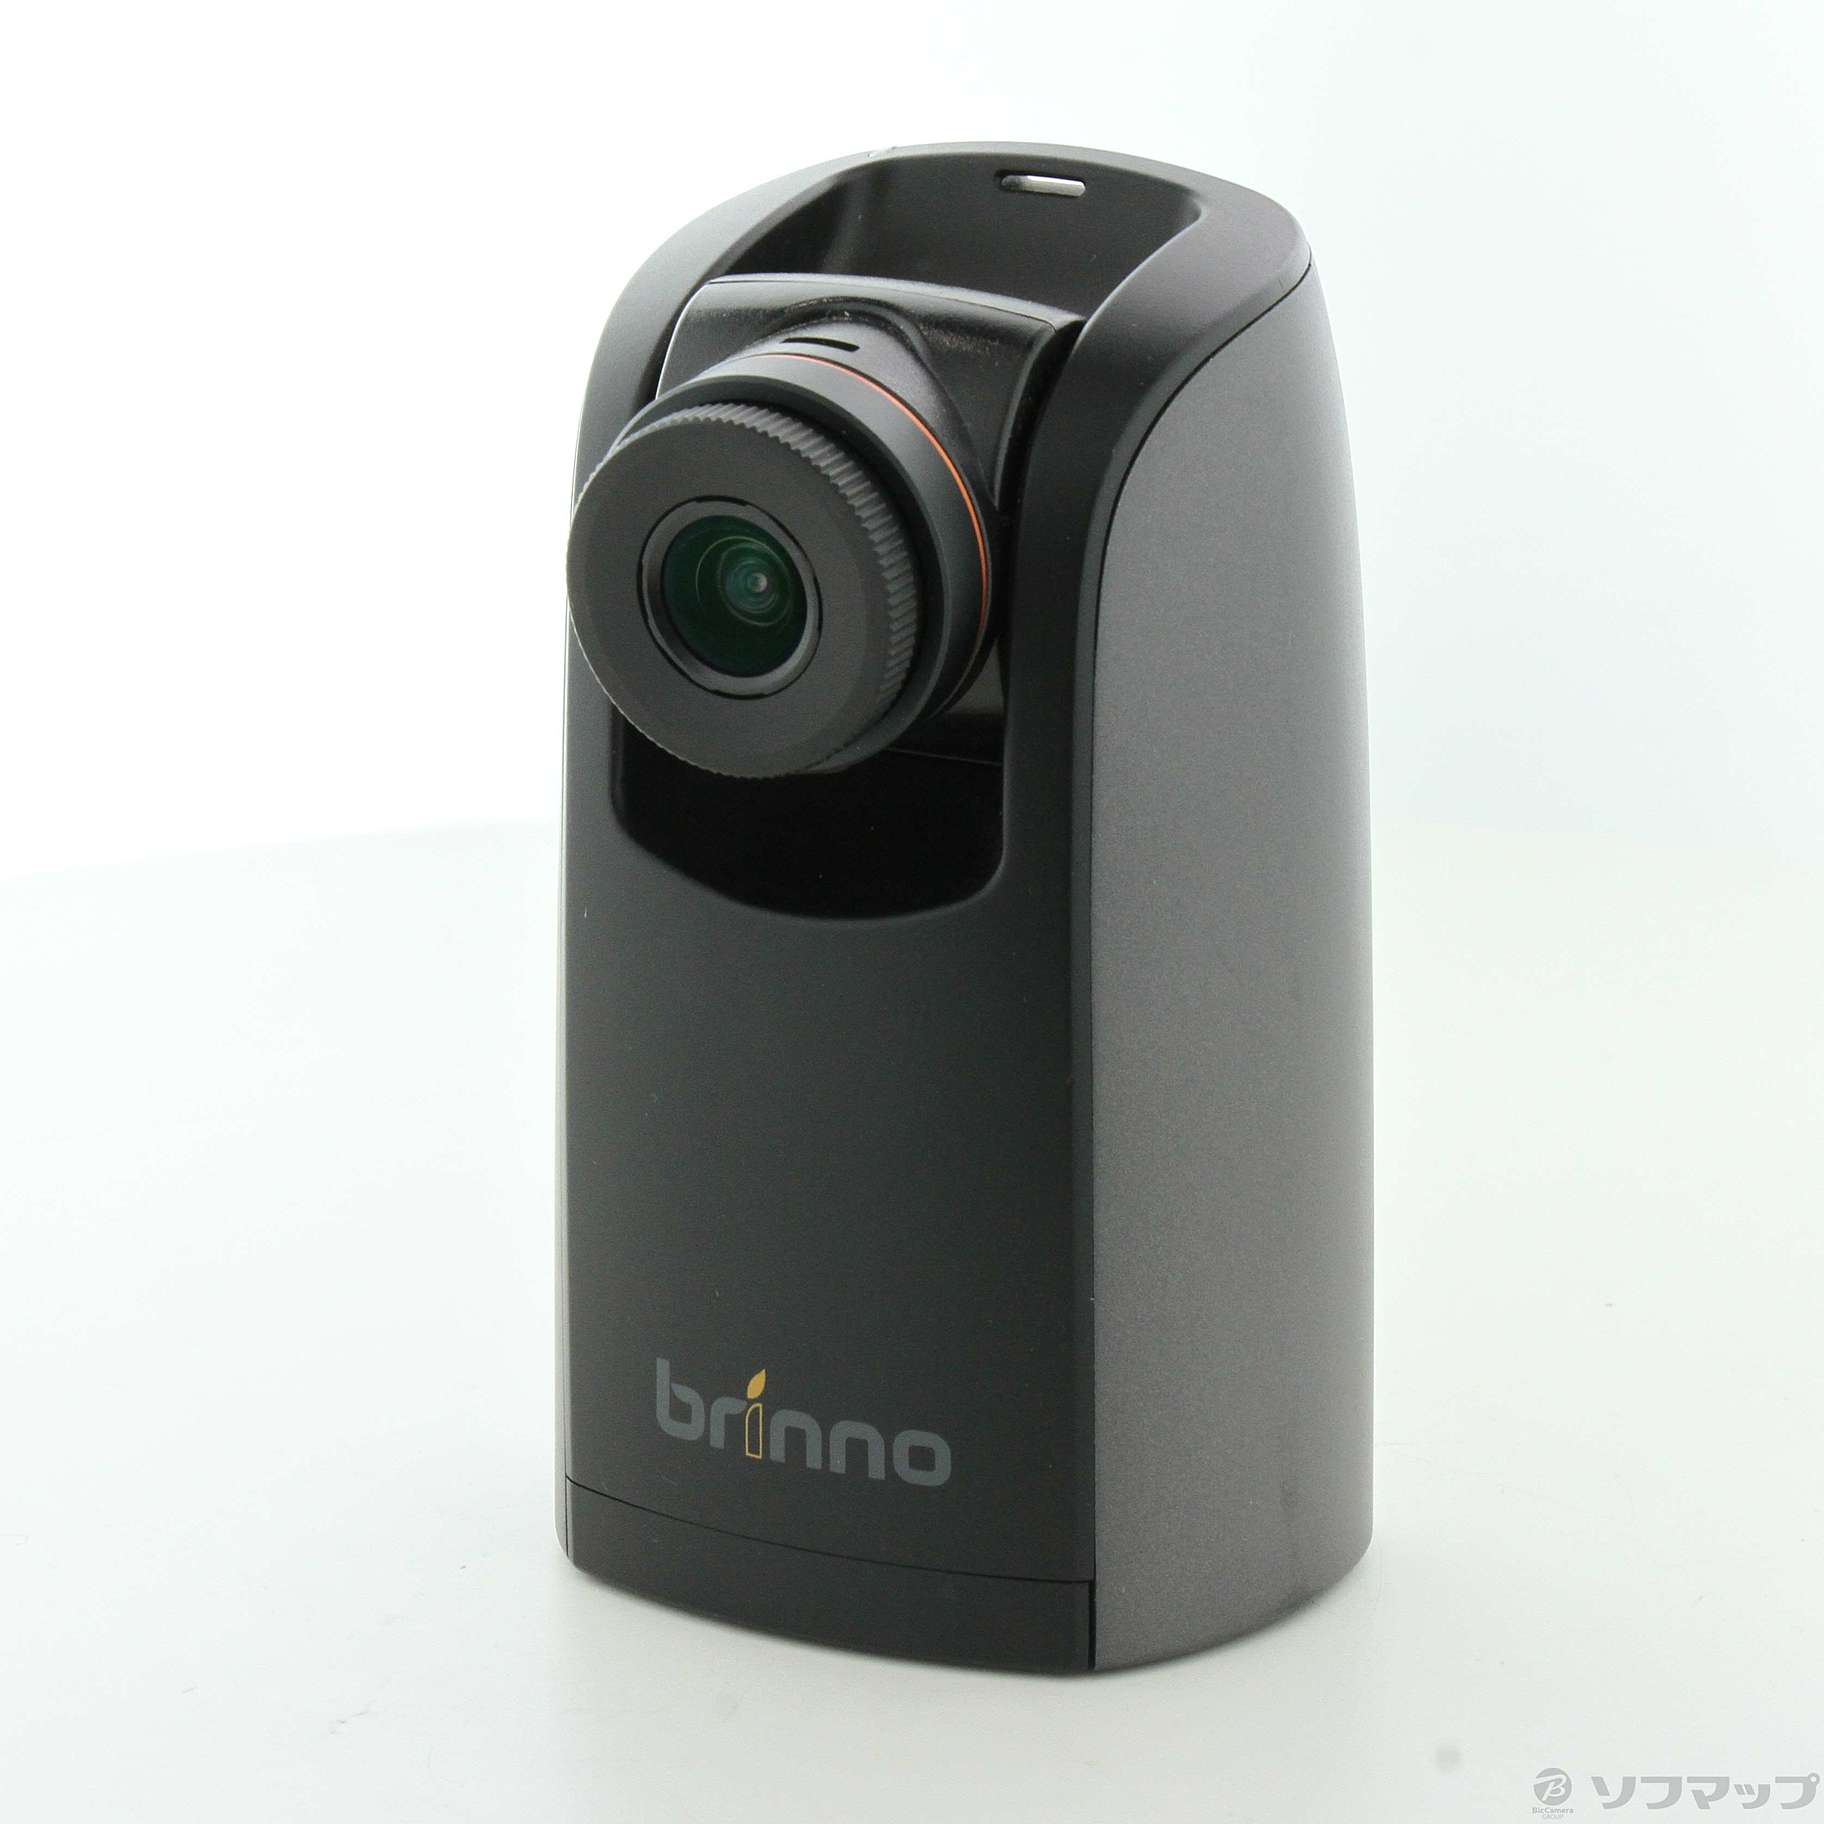  Brinno タイムラプスカメラ(定点観測用カメラ) TLC200  - 2